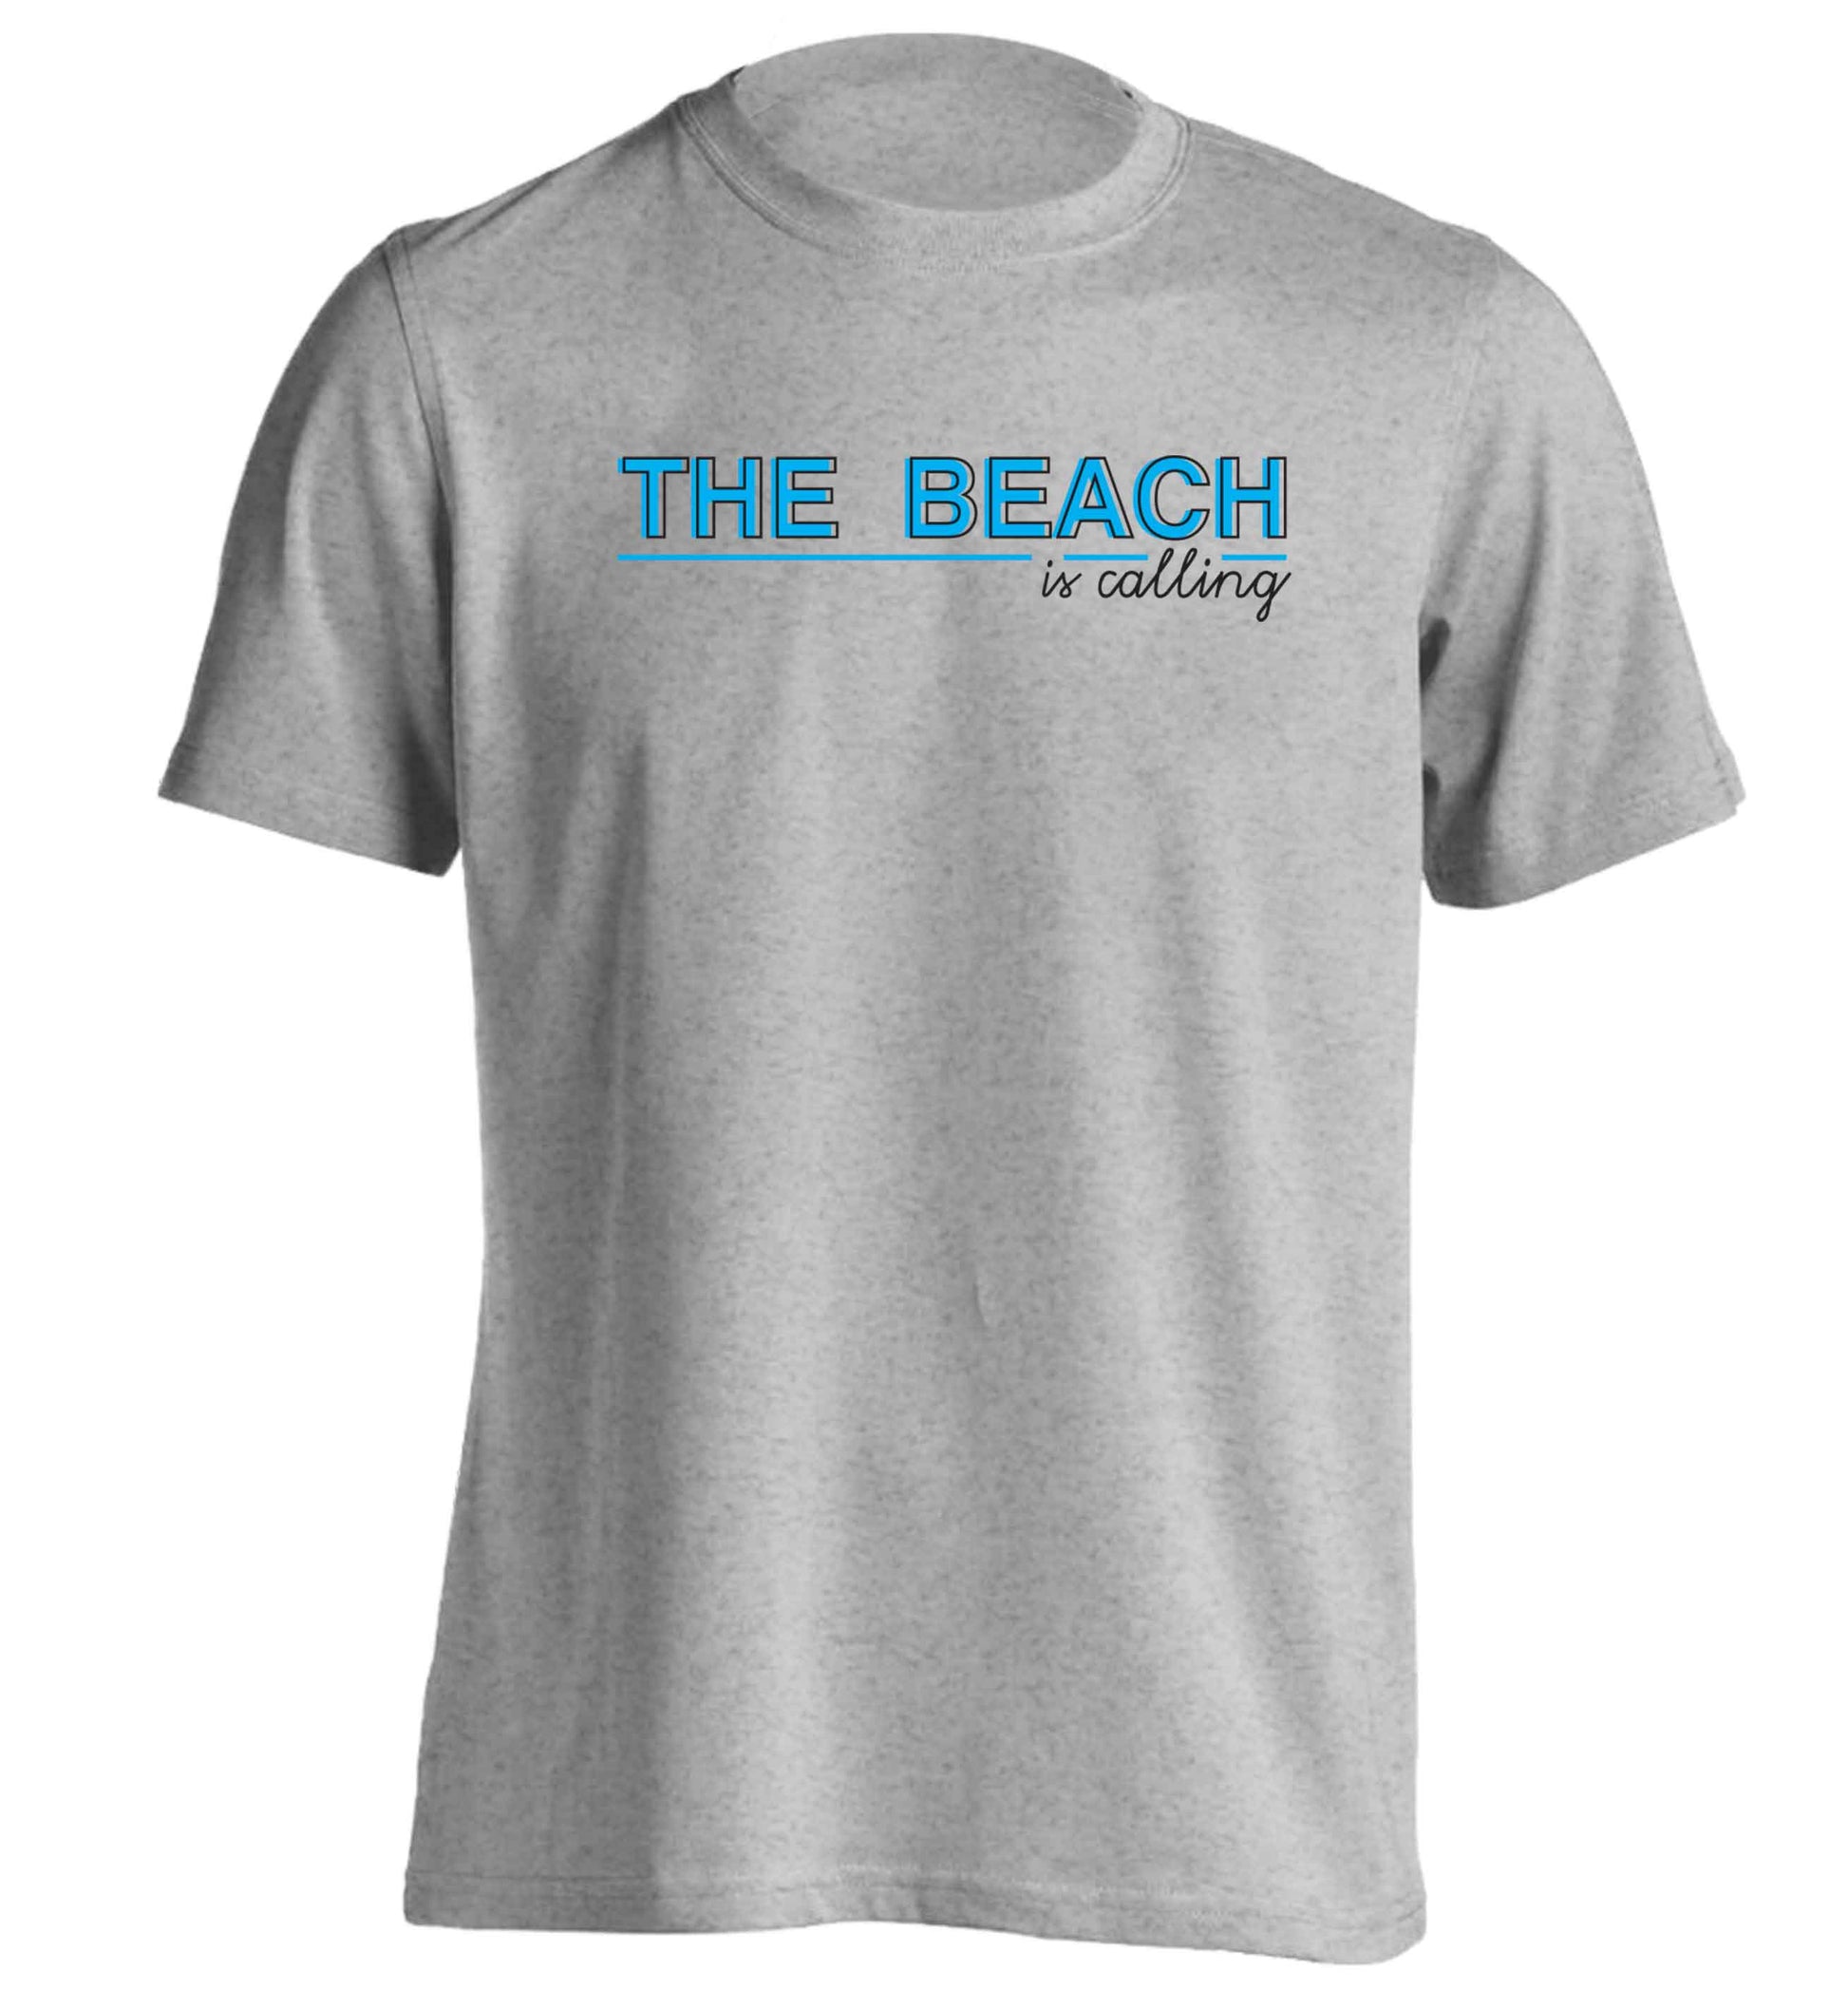 The beach is calling adults unisex grey Tshirt 2XL